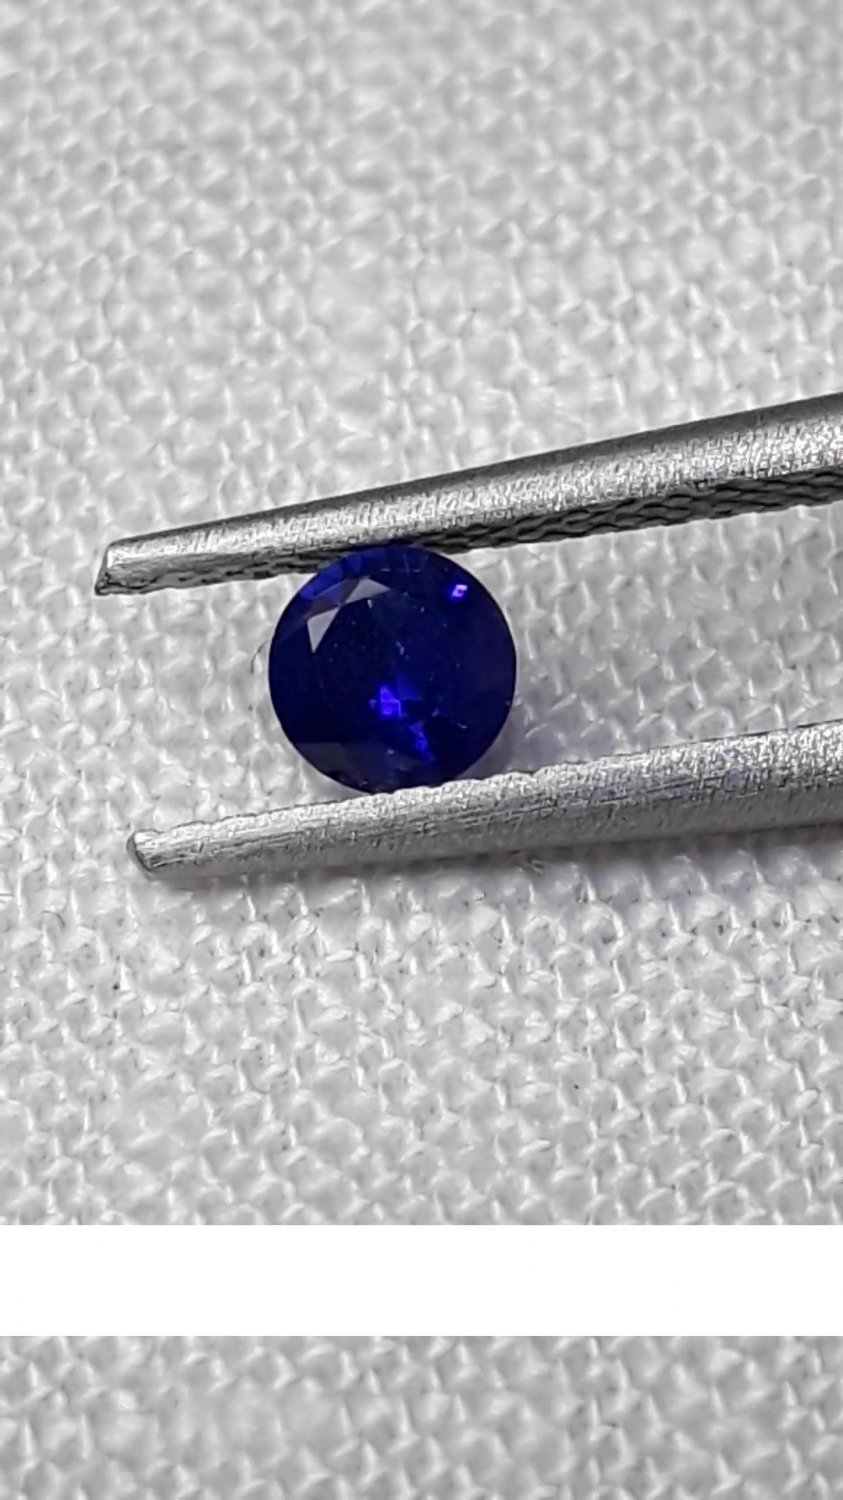 0.27 ct GIA vivid Royal Blue Sapphire, GIA Premium handcrafted round cut Sri Lanka